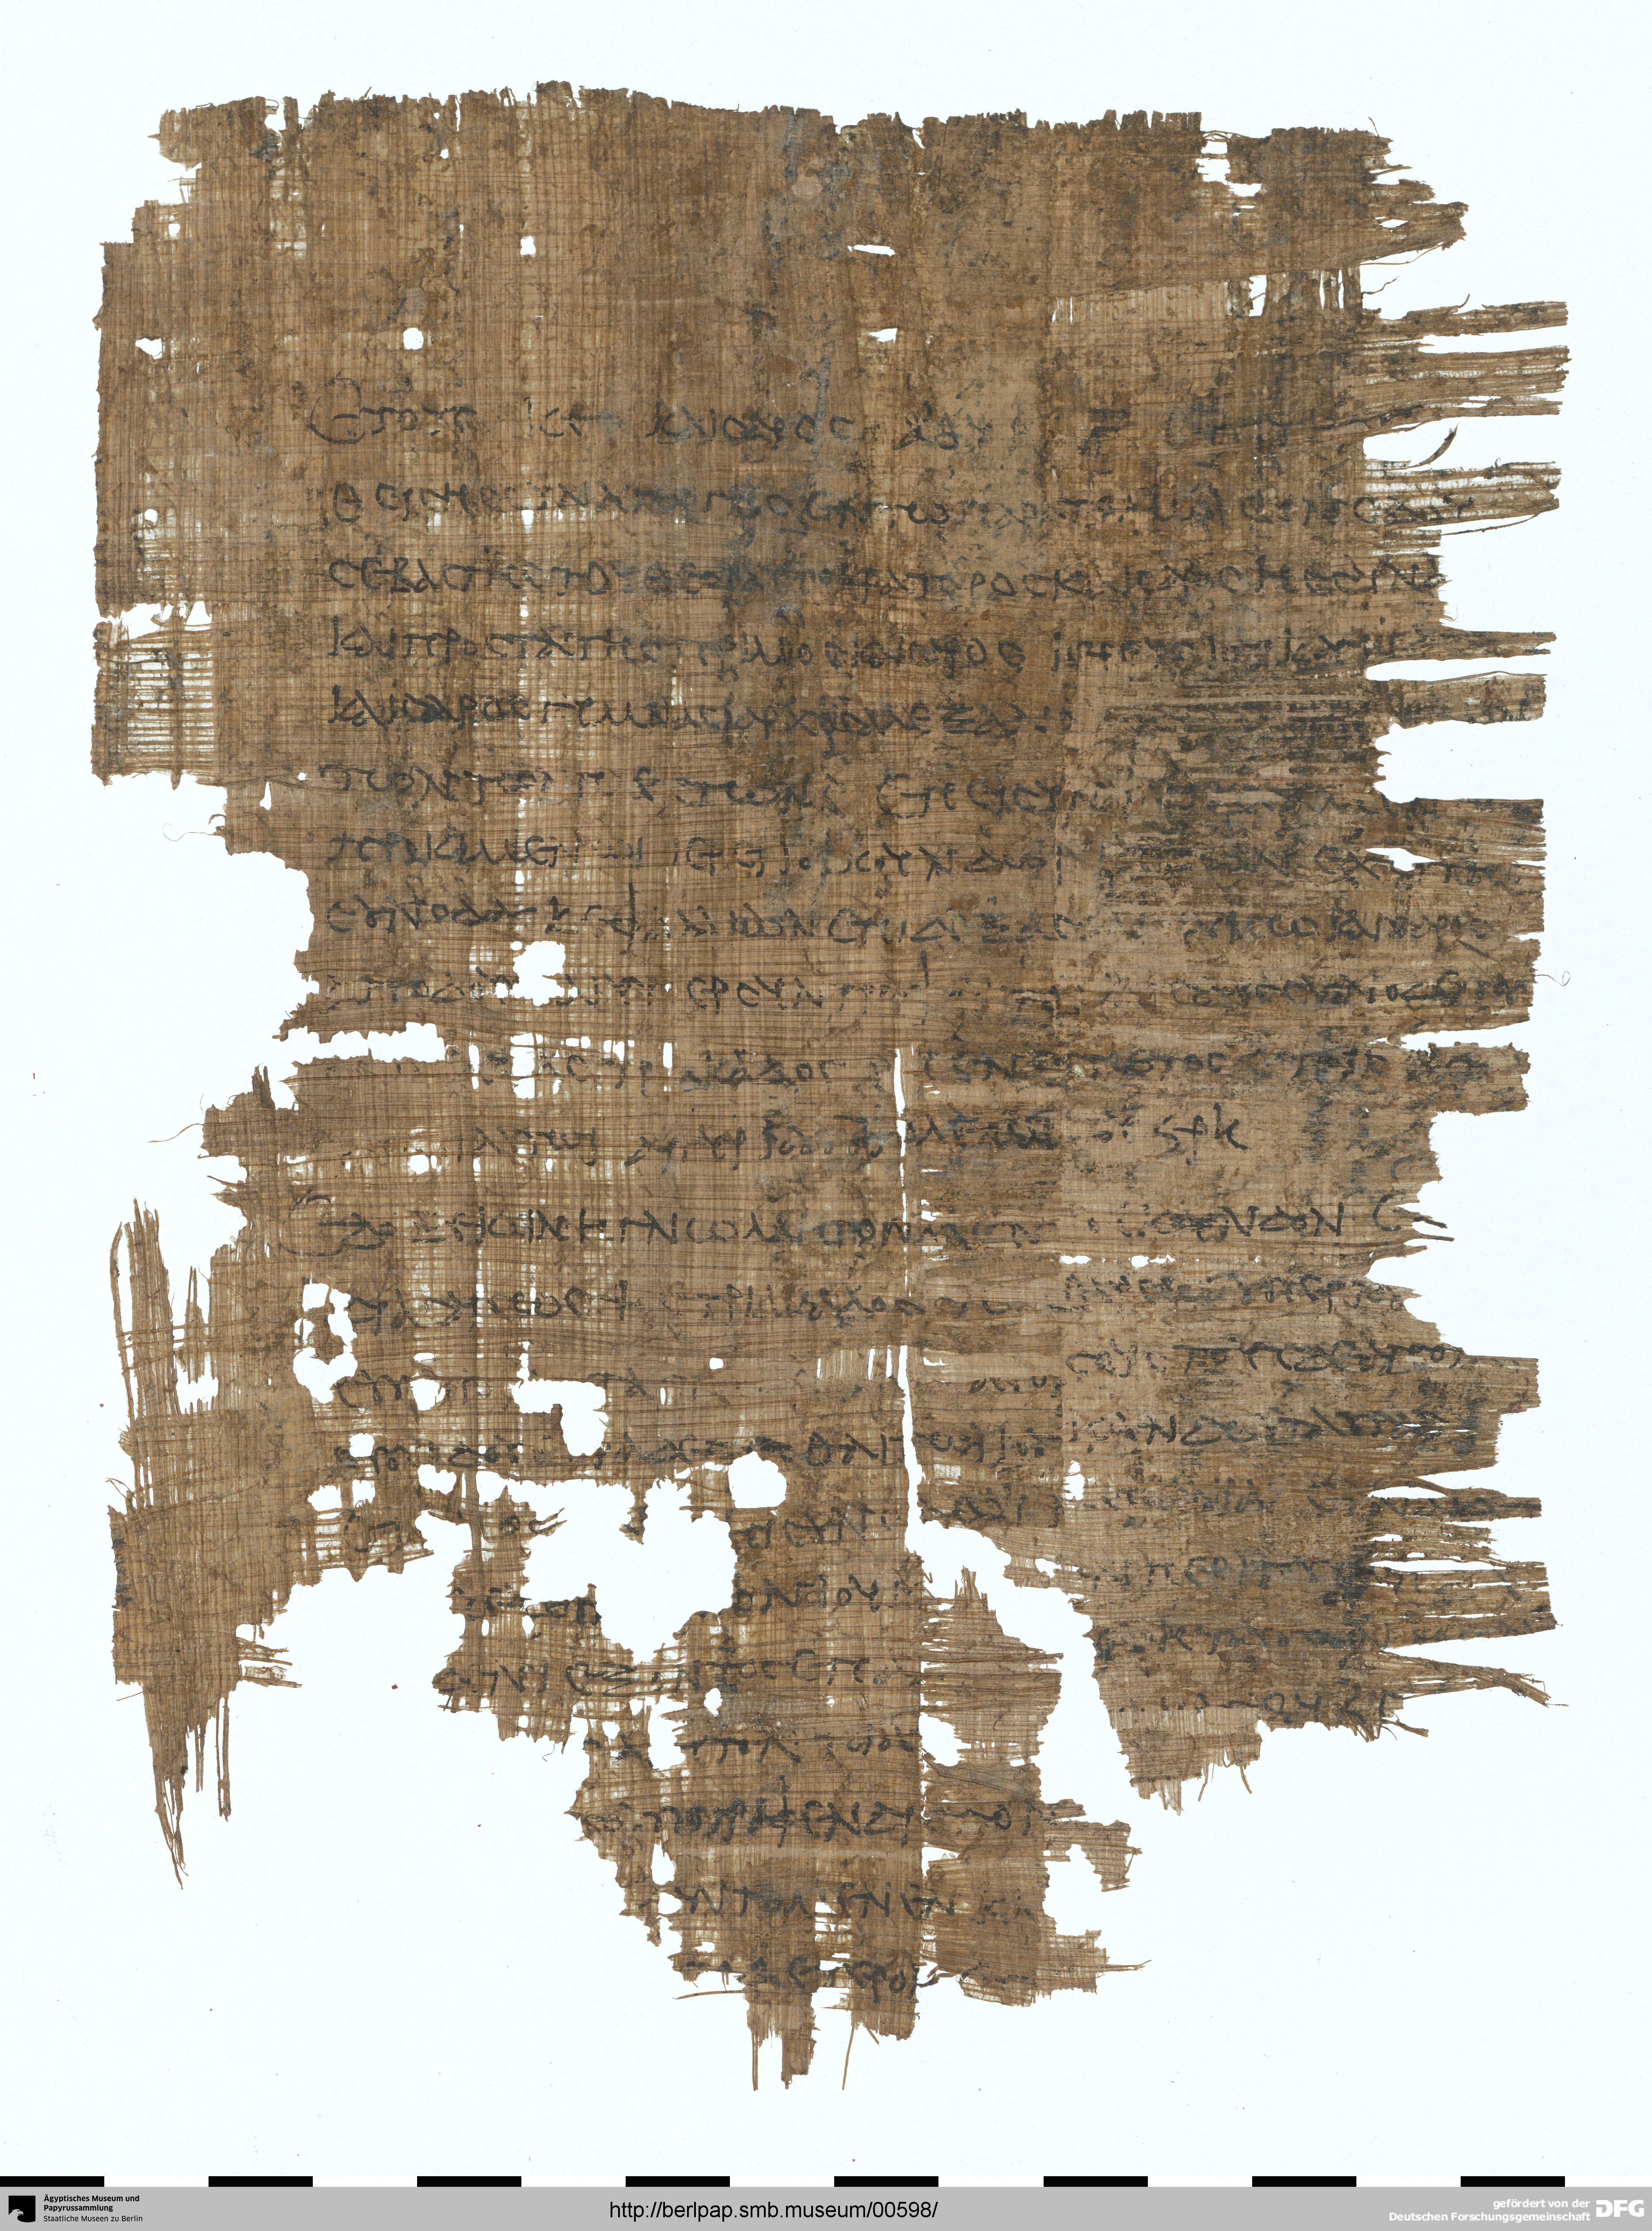 https://berlpap.smb.museum/Original/P_13137_R_001.jpg (Ägyptisches Museum und Papyrussammlung, Staatliche Museen zu Berlin CC BY-NC-SA)